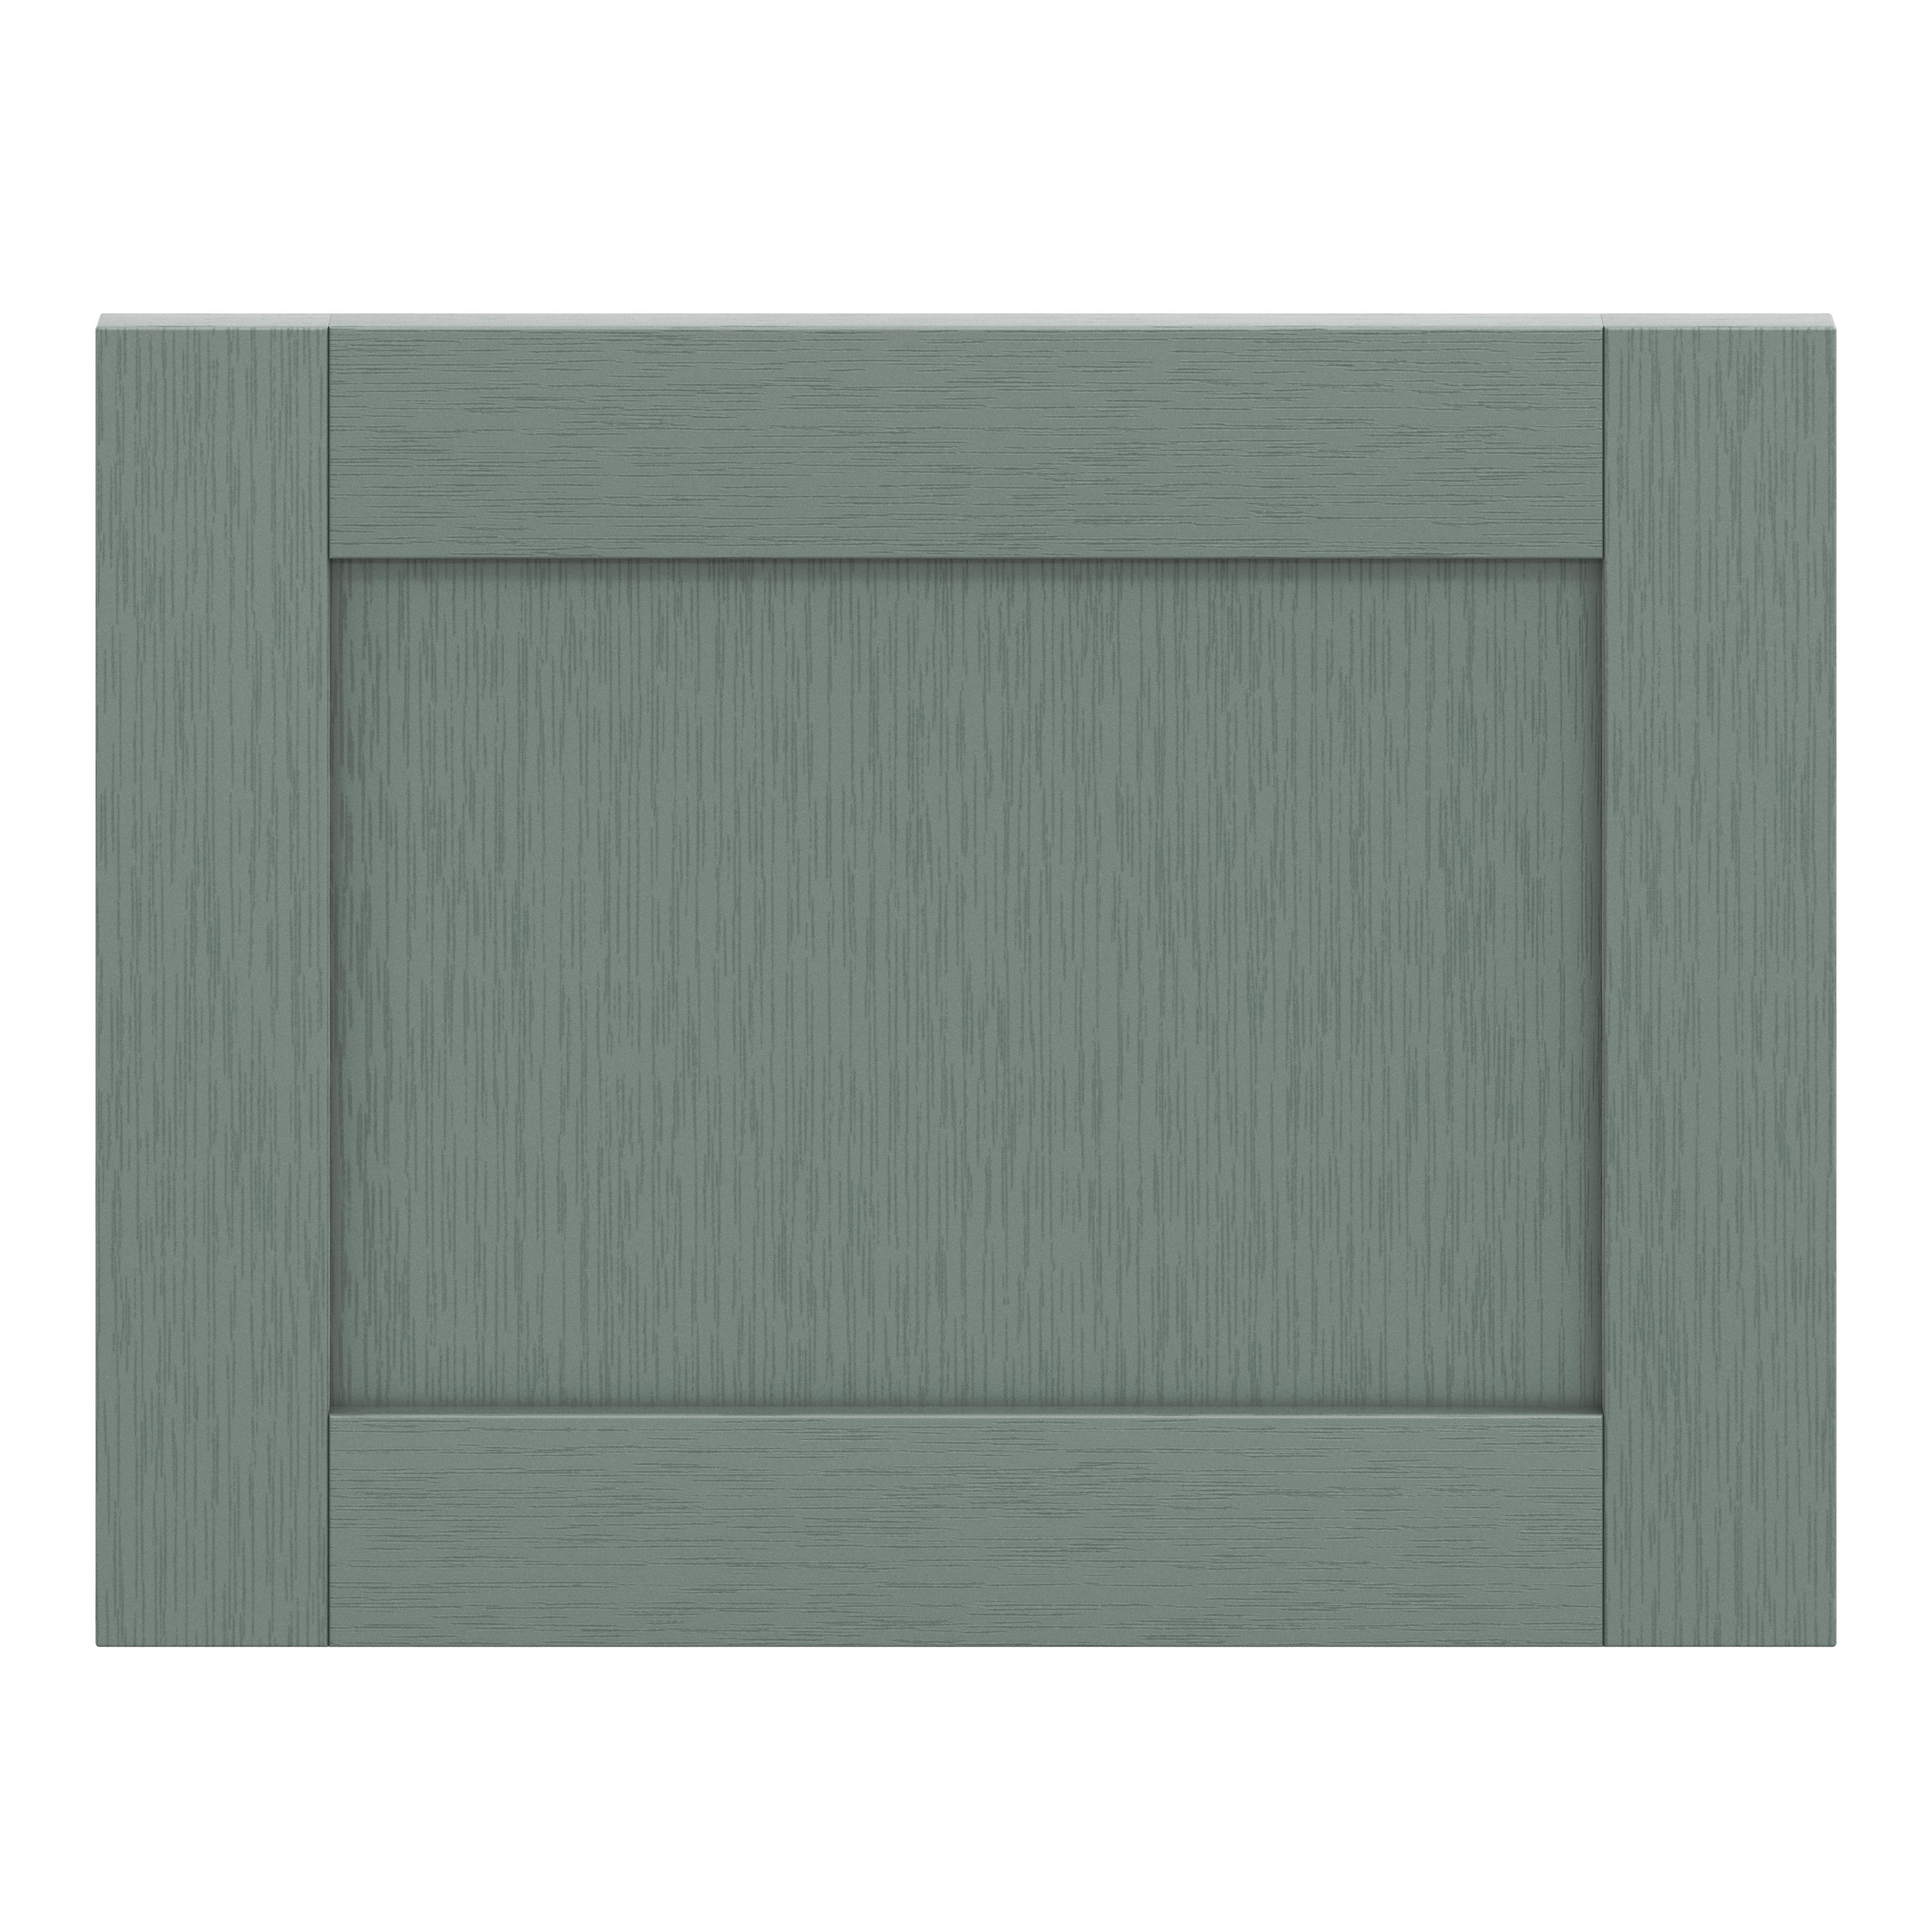 GoodHome Alpinia Matt Green Painted Wood Effect Shaker Appliance Cabinet door (W)600mm (H)453mm (T)18mm